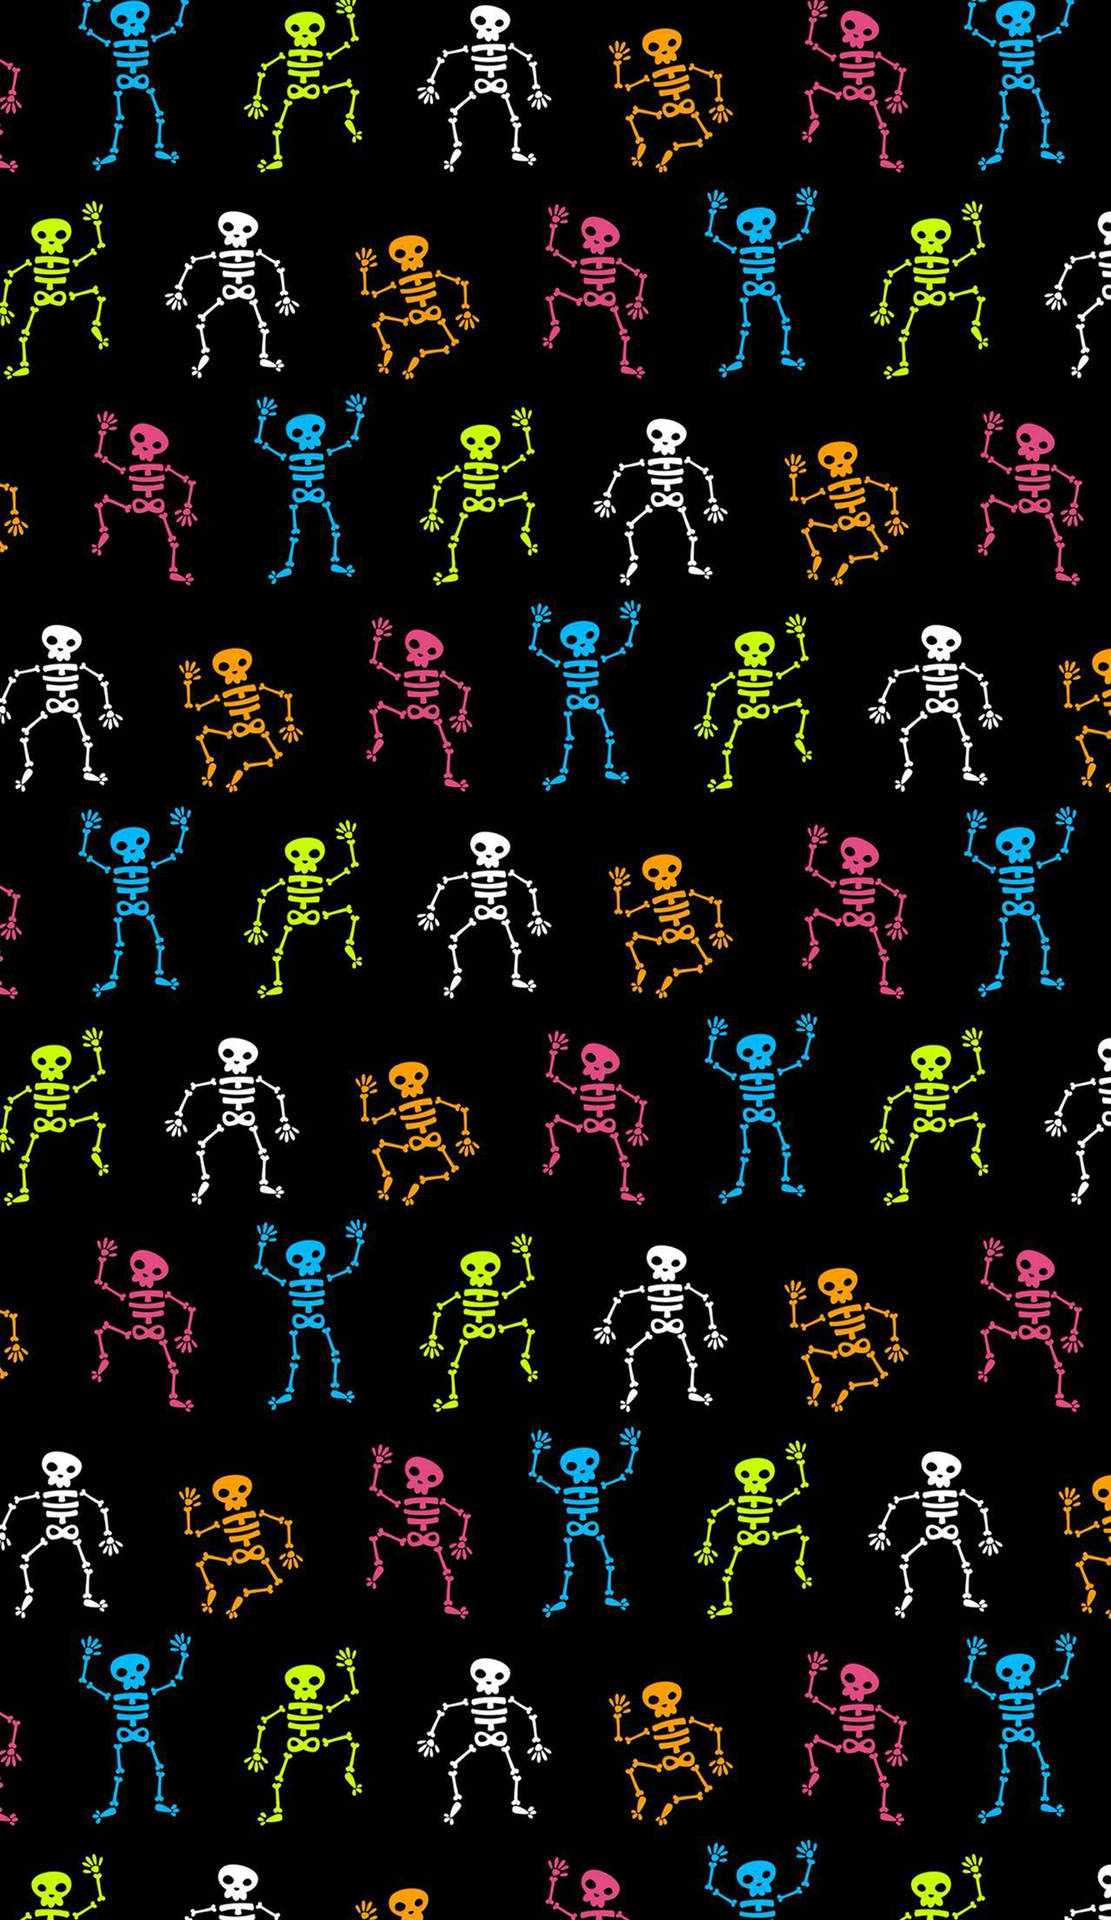 Colorful Cartoon Skeletons Wallpaper